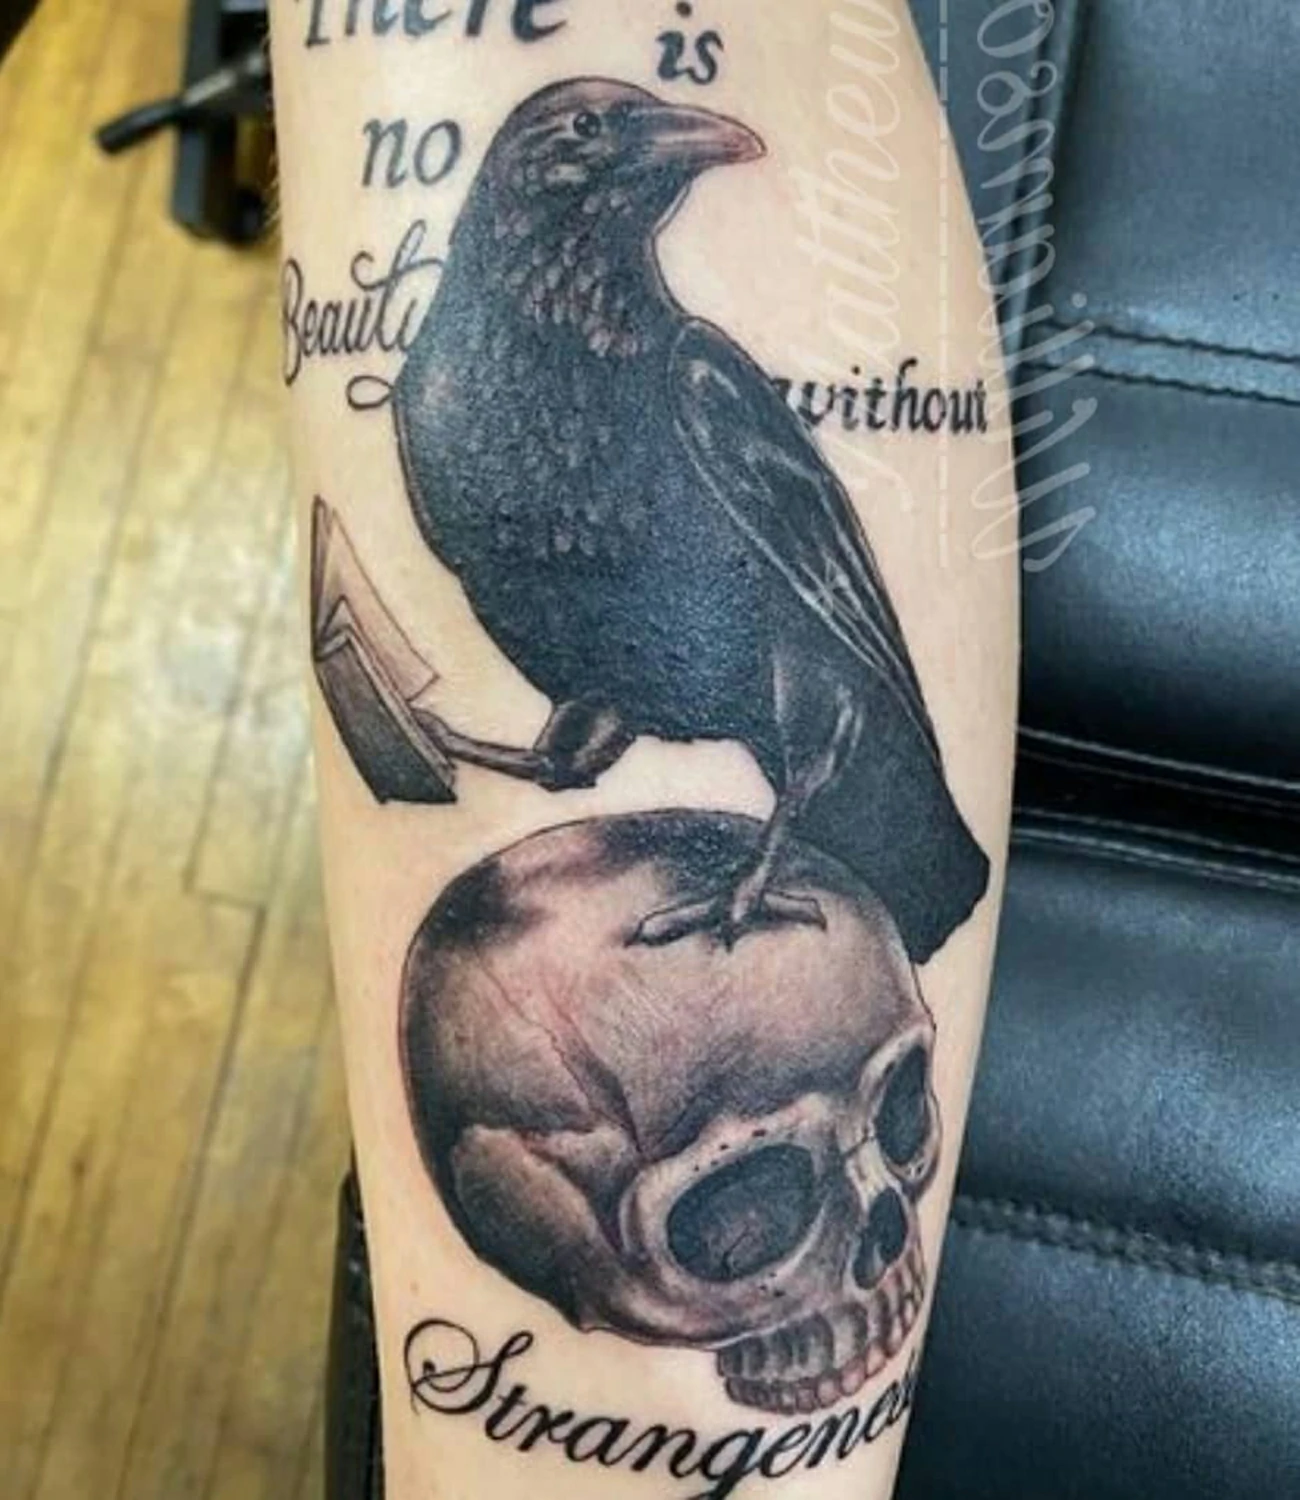 Edgar Allan Poe raven tattoo: A tattoo inspired by Edgar Allan Poe’s poem "The Raven."